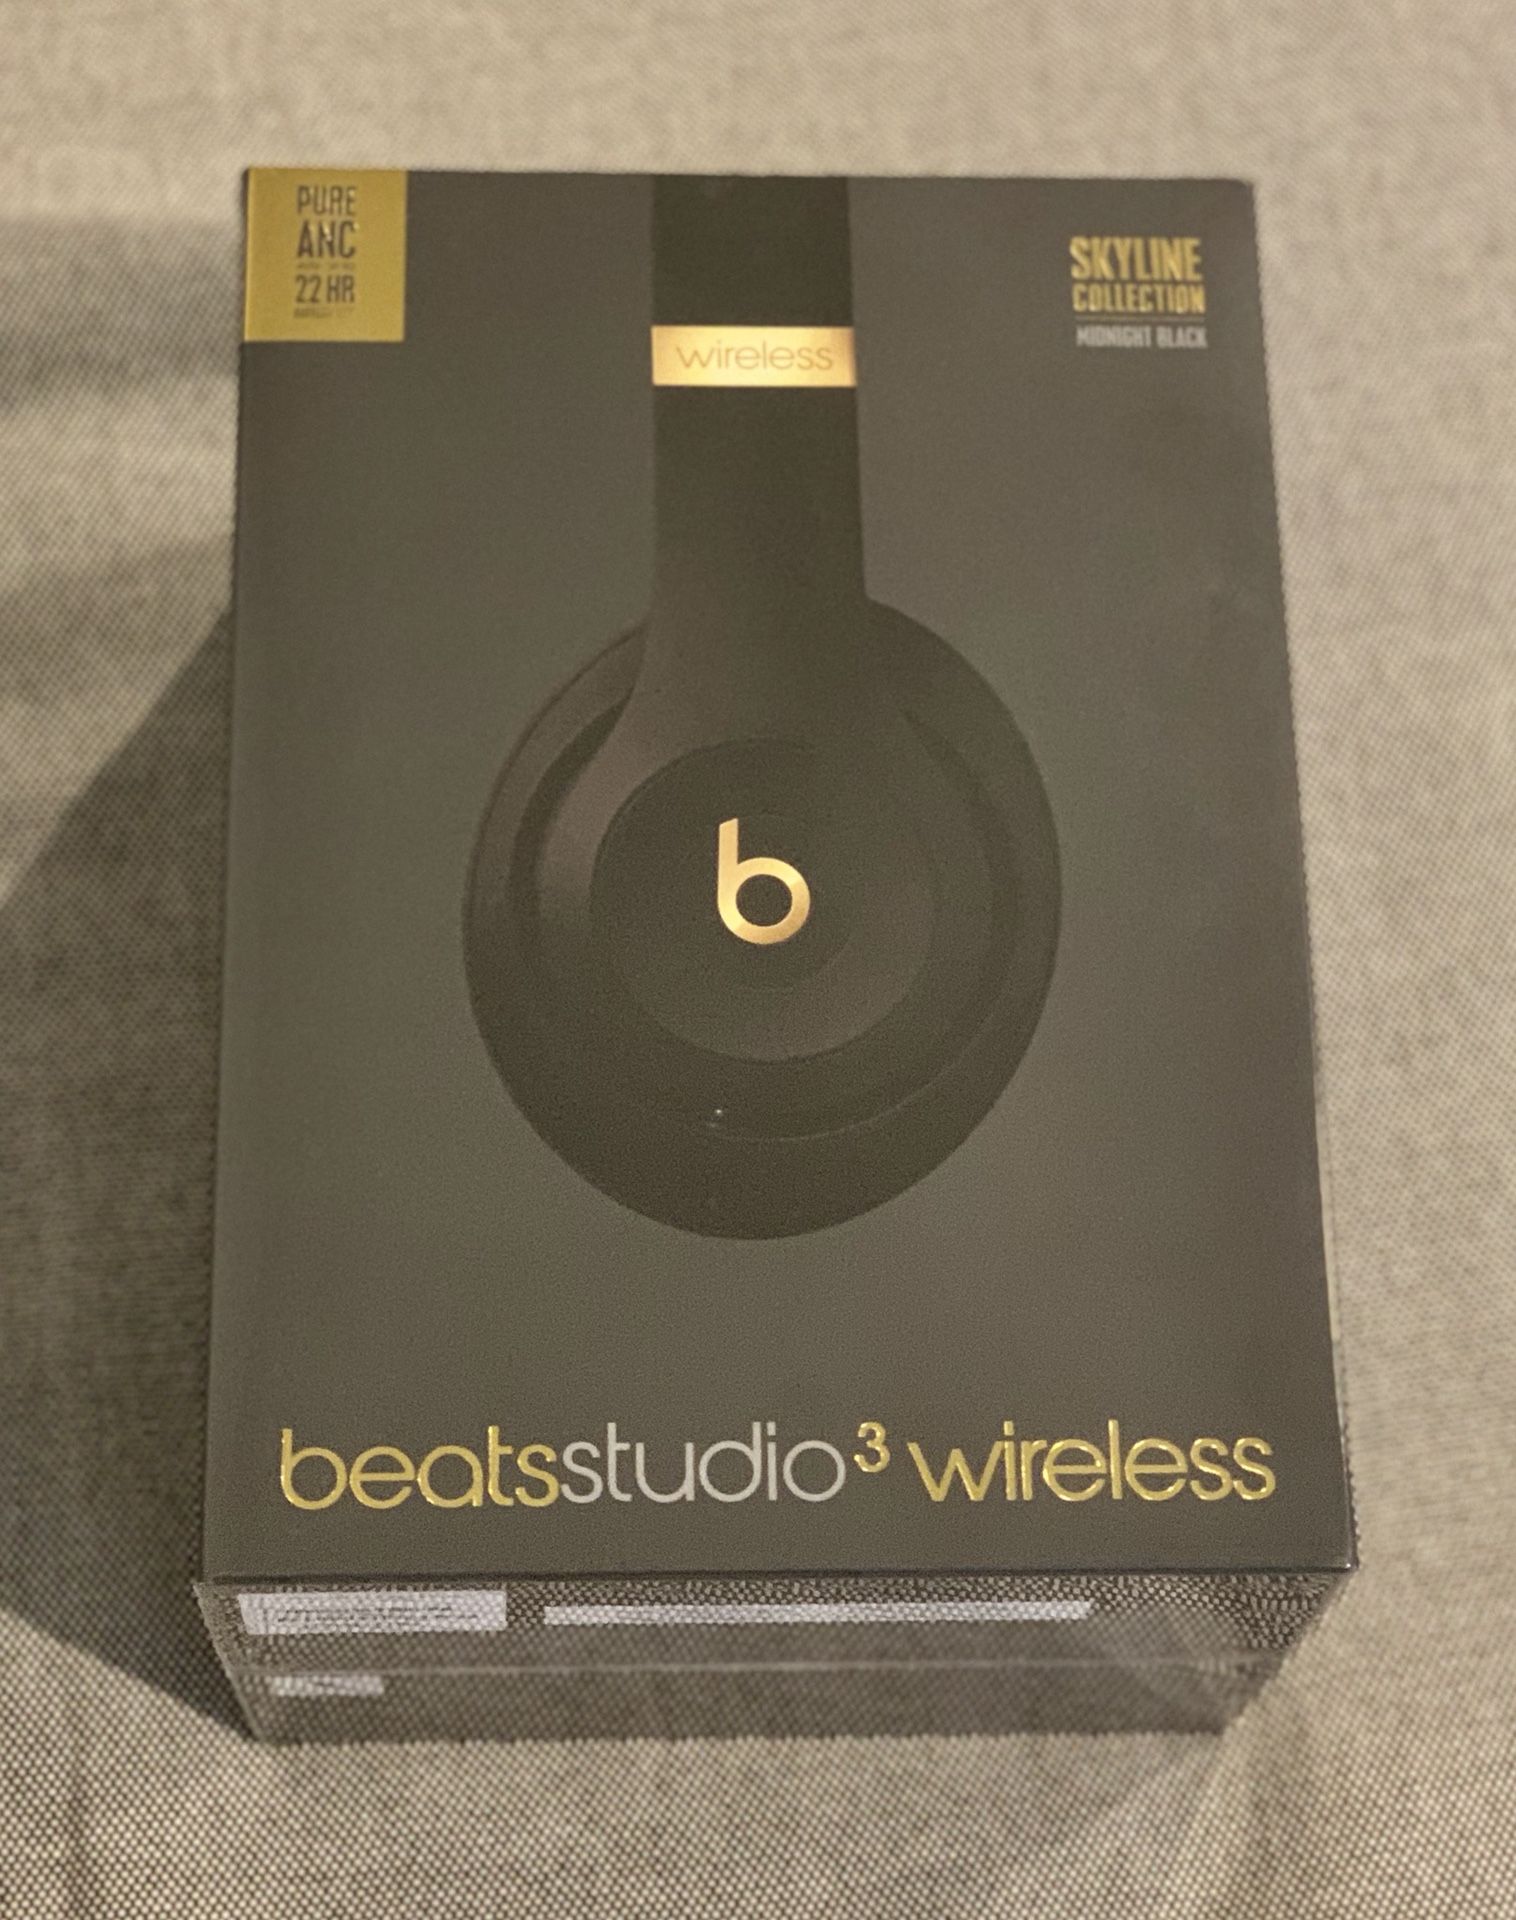 Beats studio 3 wireless headphones - BRAND NEW